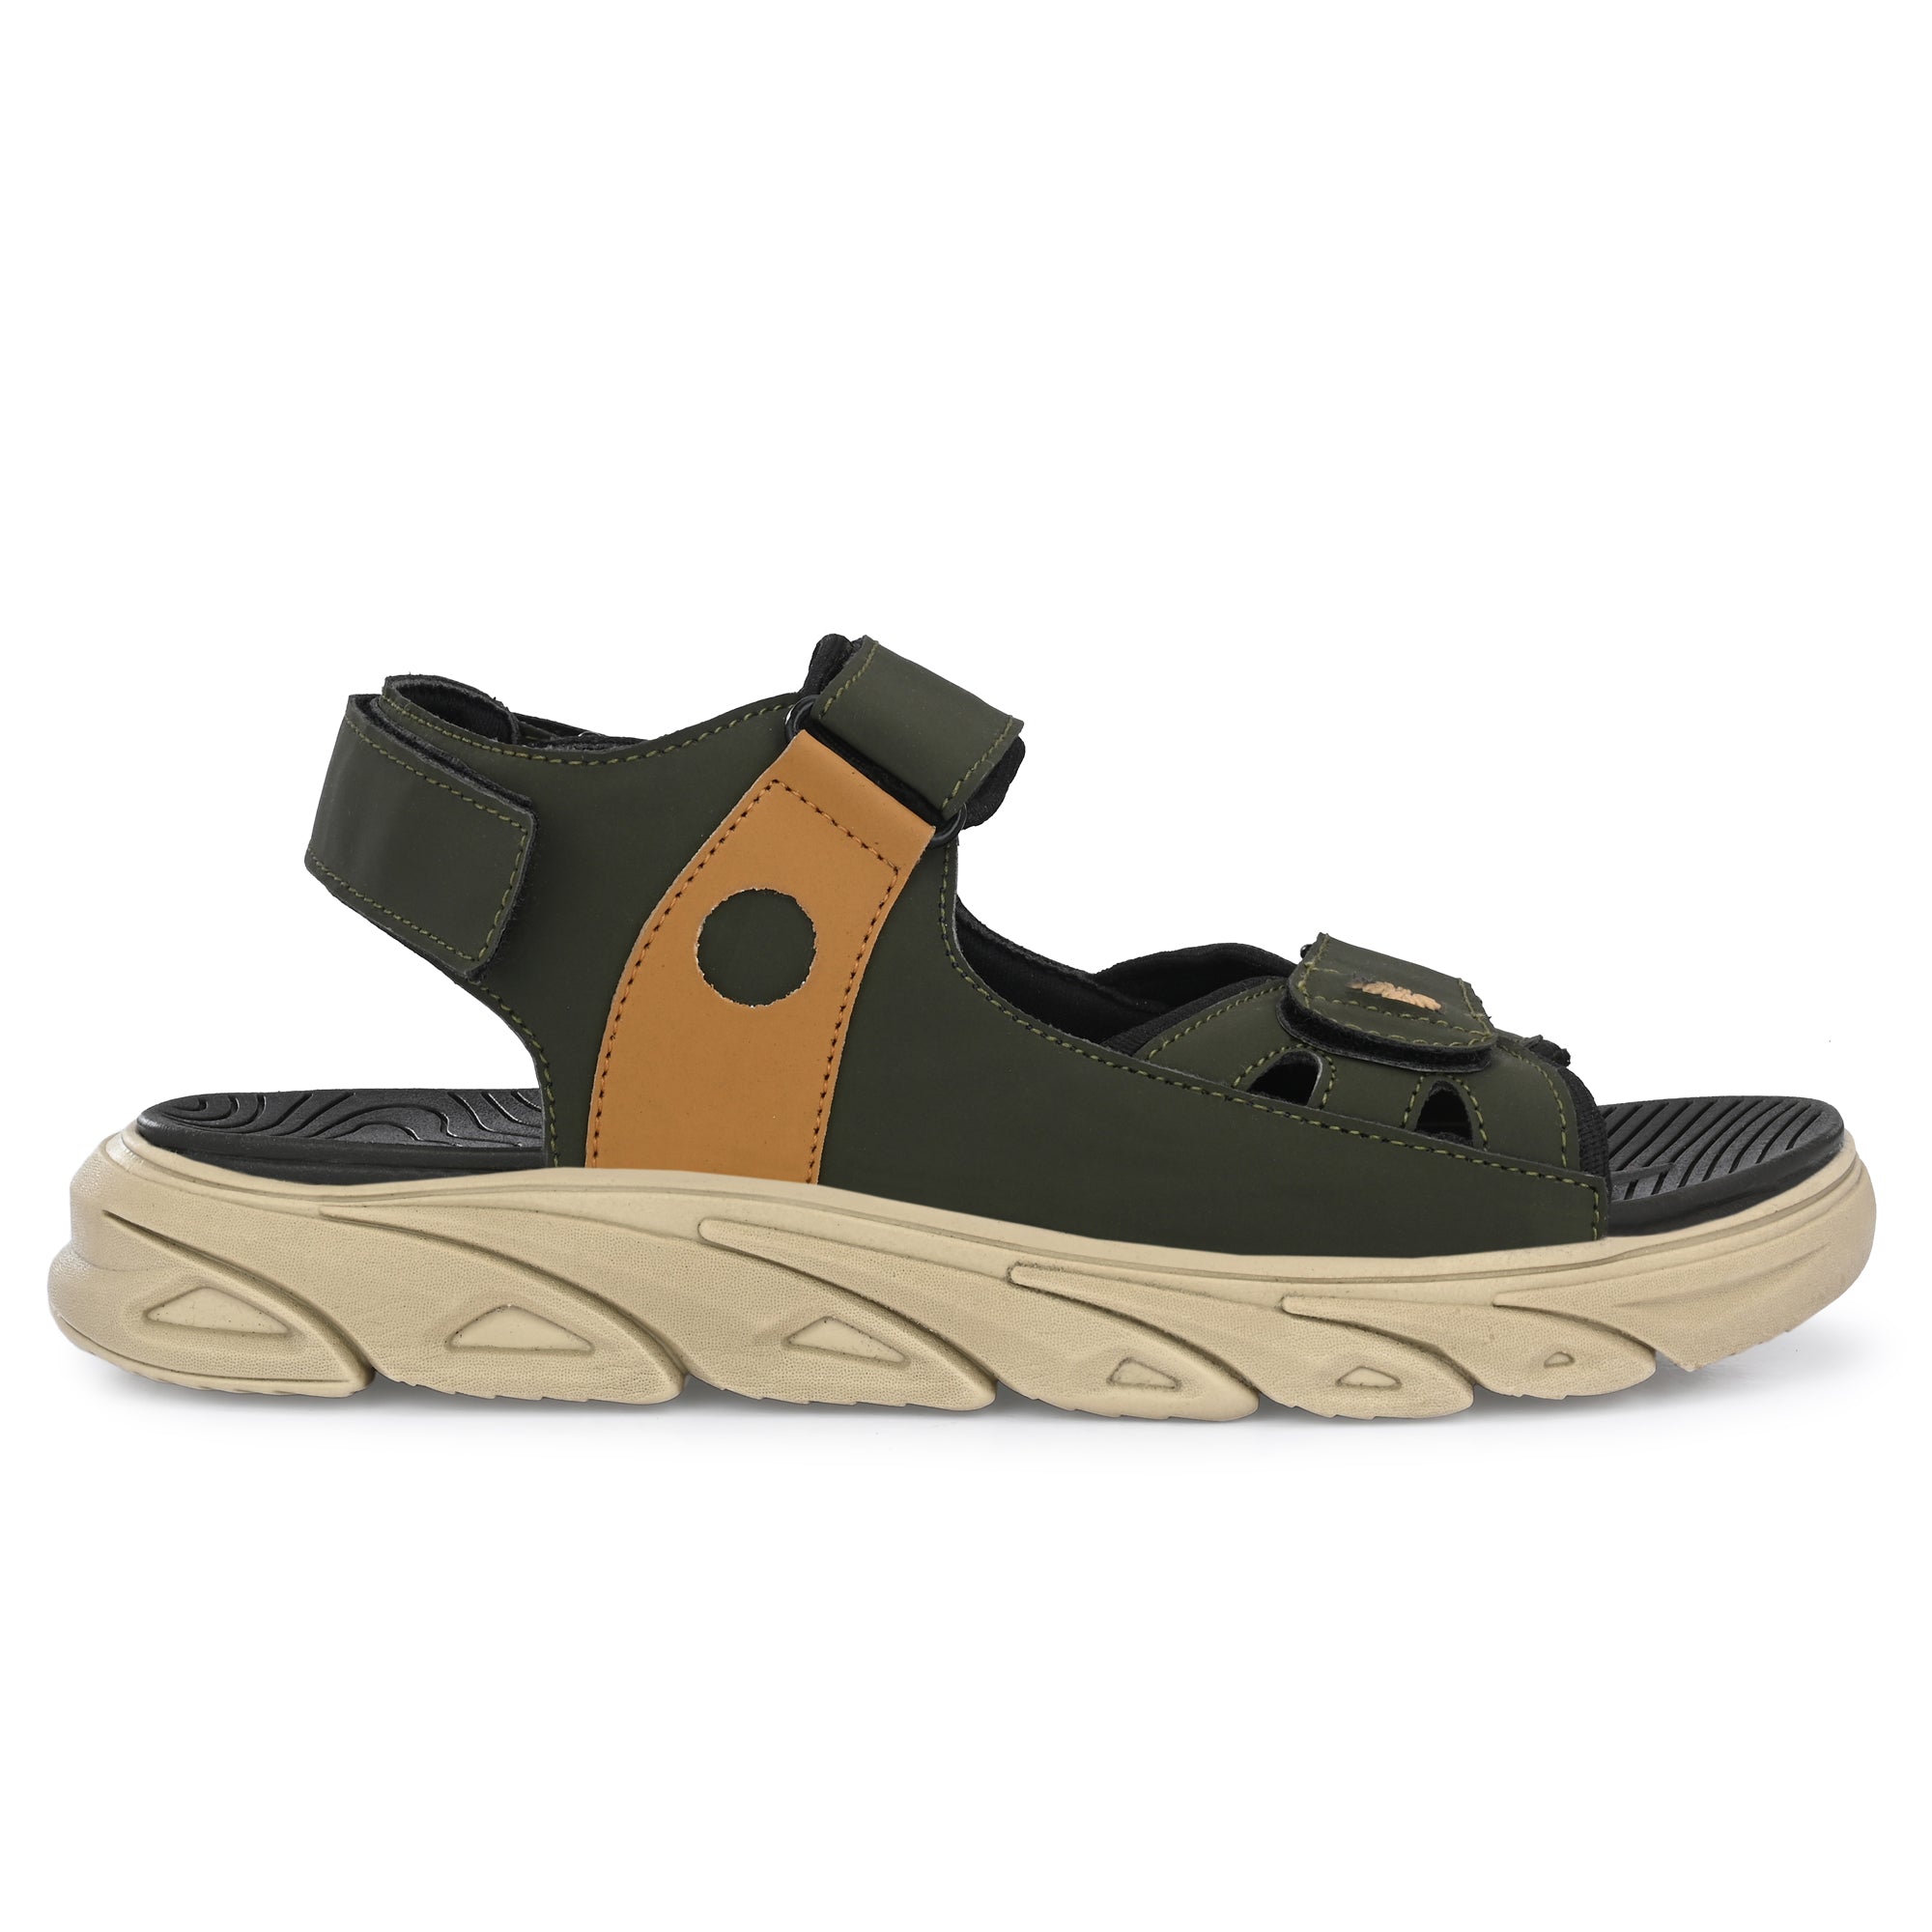 Atika Men's Outdoor Hiking Sandals Closed Toe Athletic Sport Sandals Blk  Size 11 | eBay